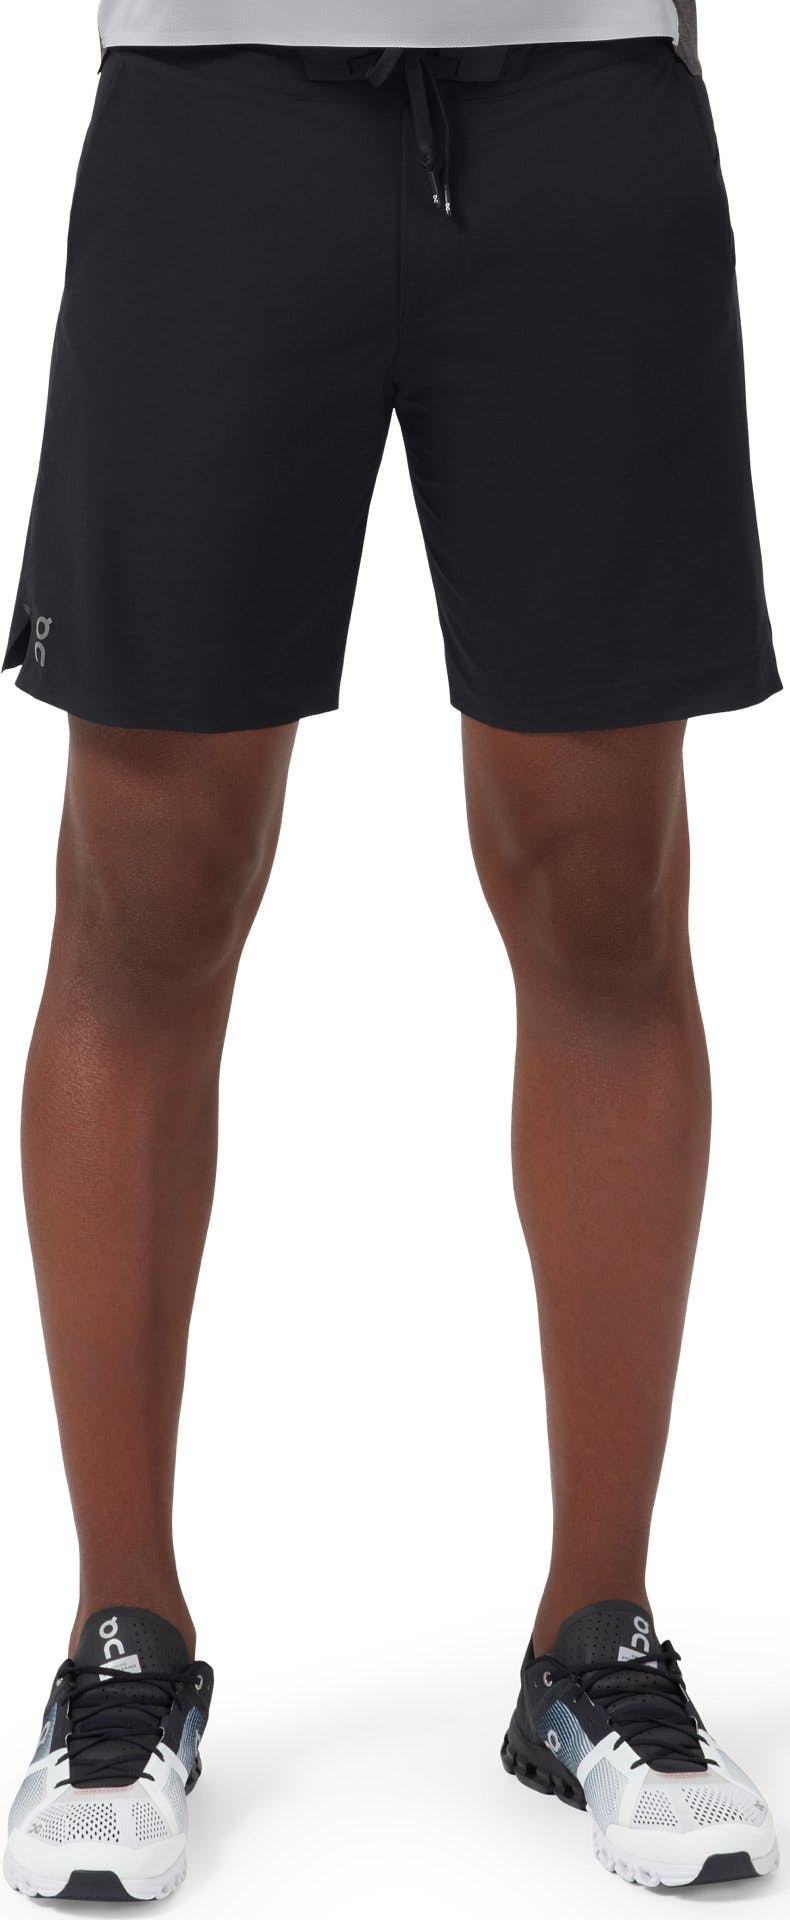 Product image for Hybrid Shorts - Men's